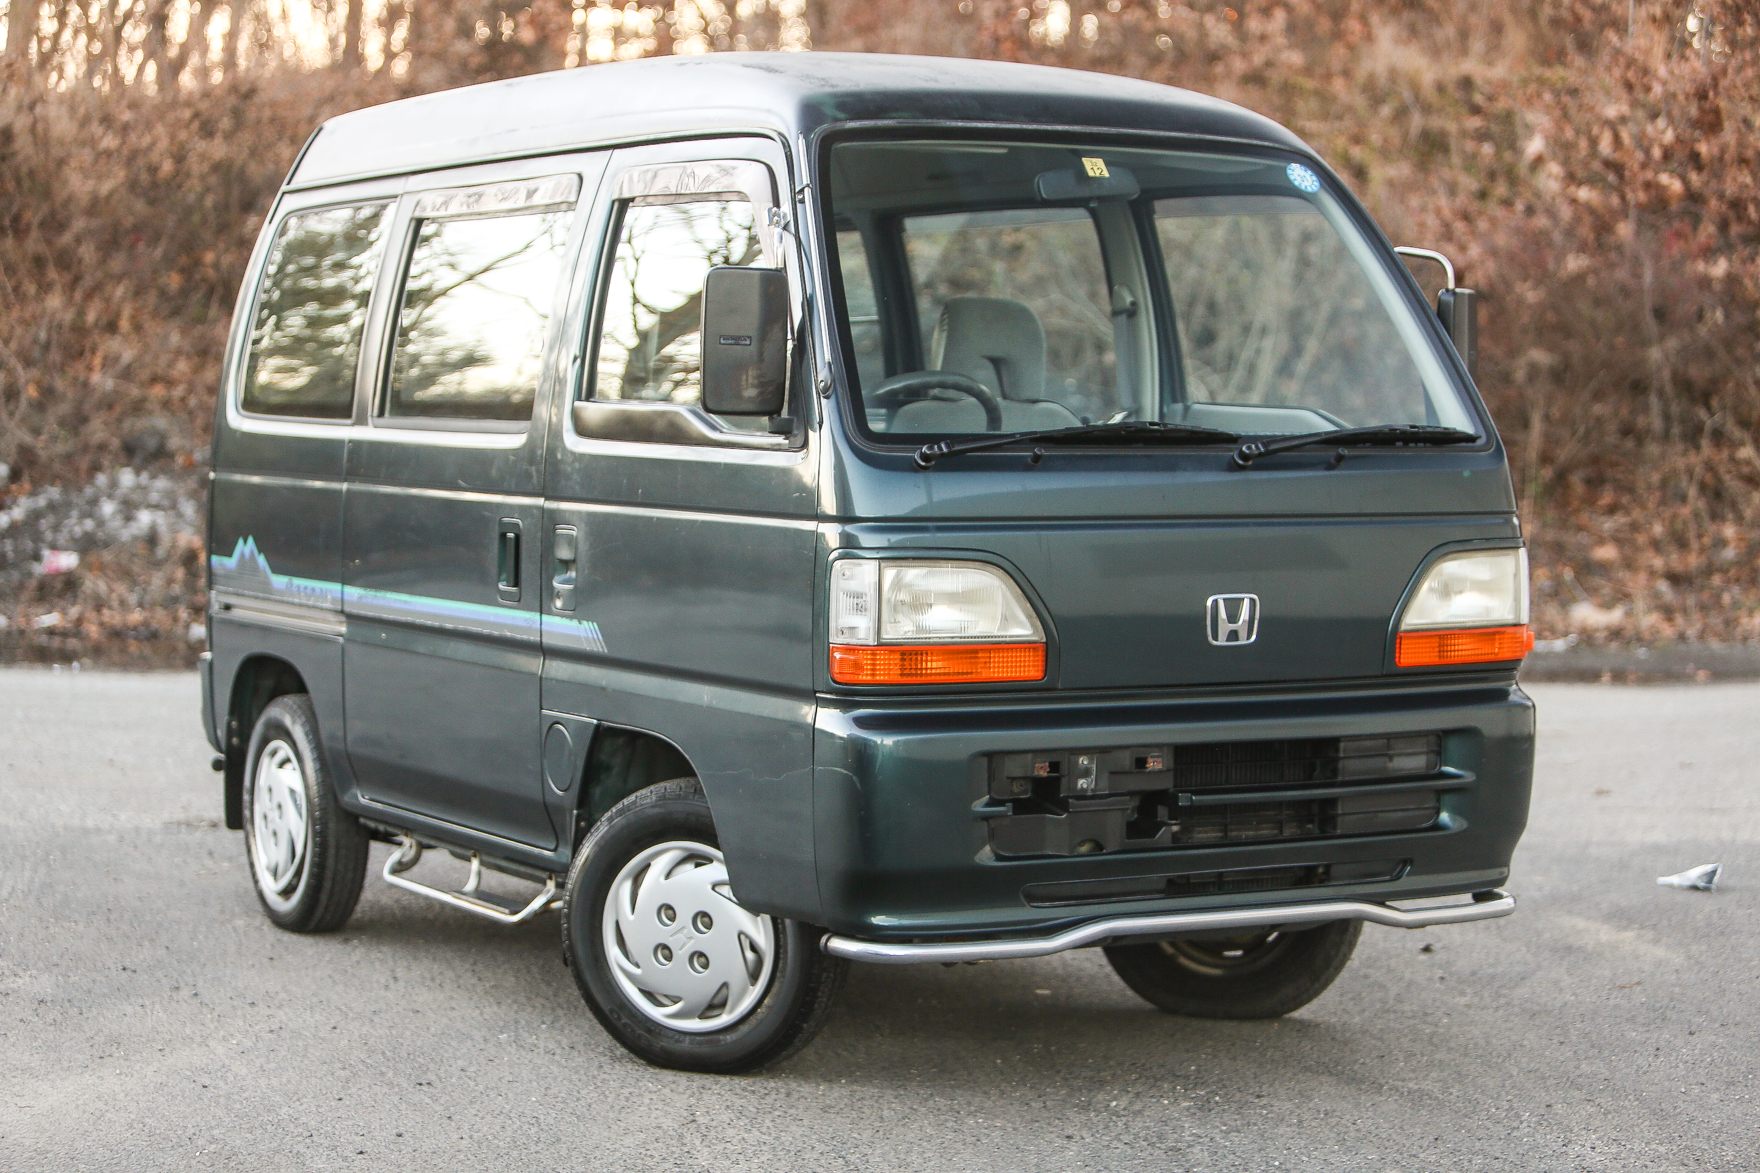 1994 Honda Street Van - $8,950